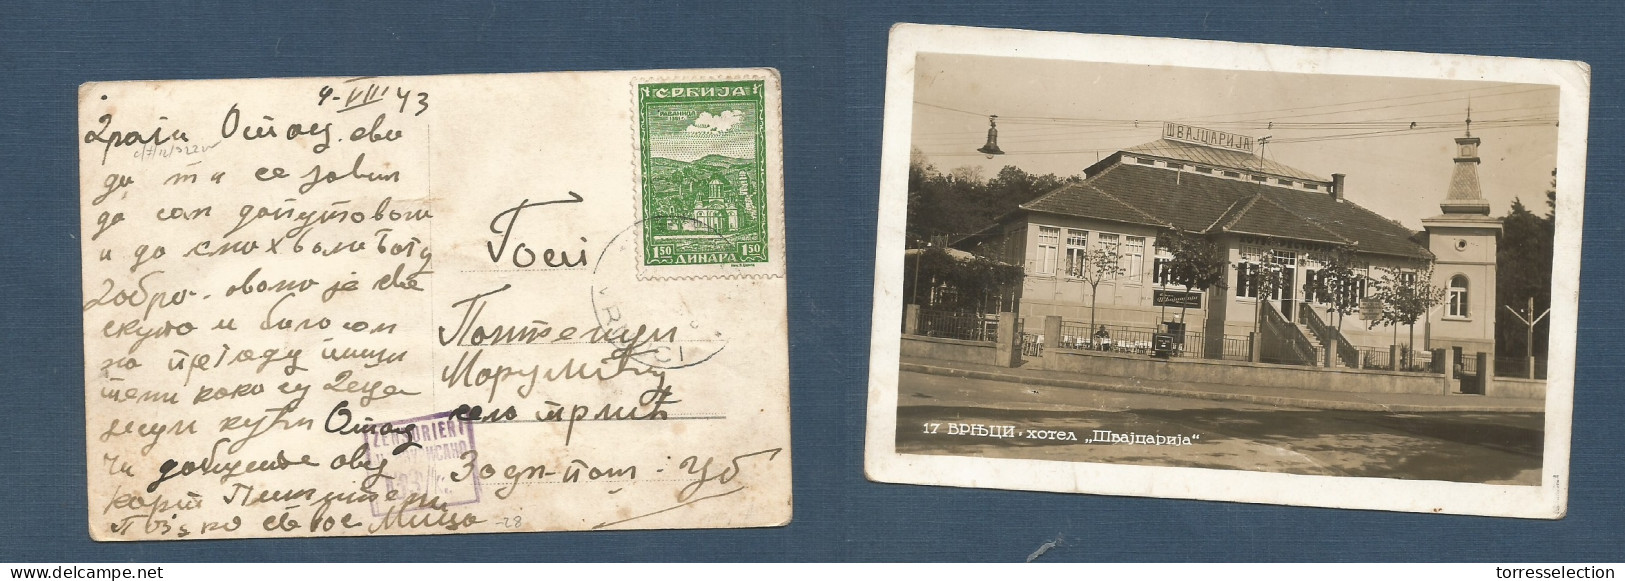 SERBIA. 1943 (4 Aug) Vrnuci Local WWII Censored Ppc. Interesting. Scarce Private Item Fkd 1,50p Green. XSALE. - Serbie